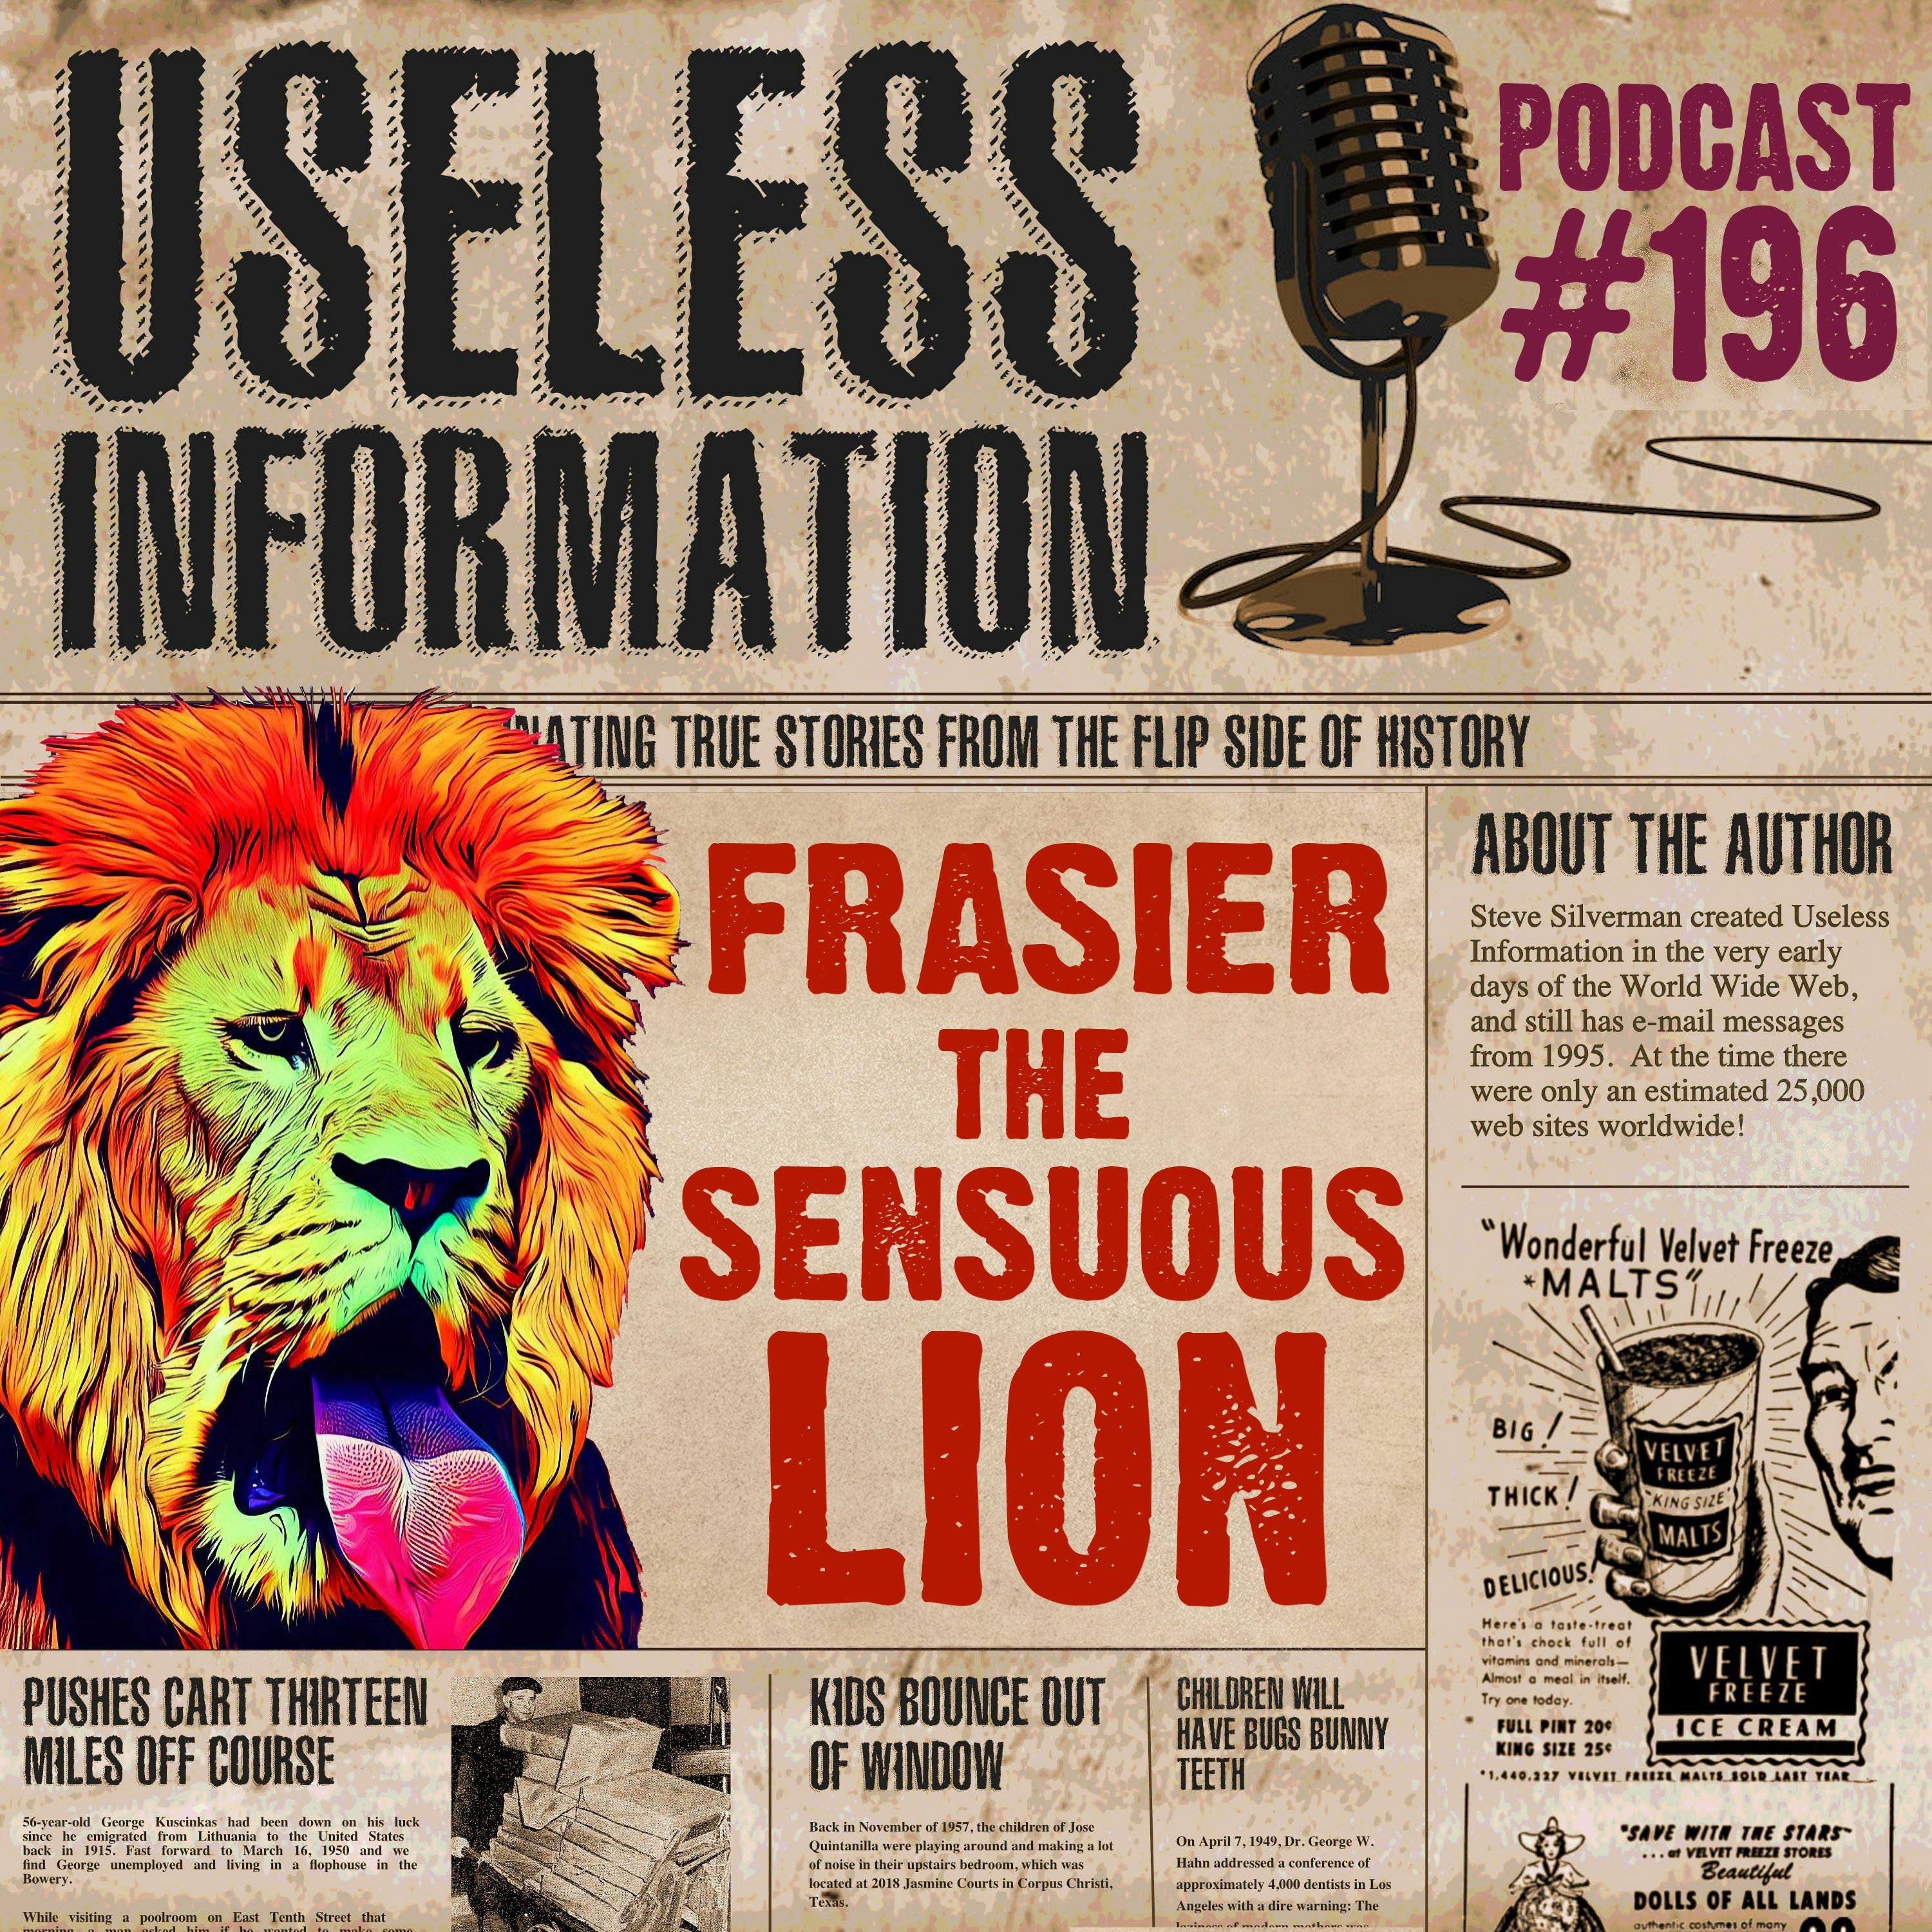 Frasier, the Sensuous Lion - UI Podcast #196